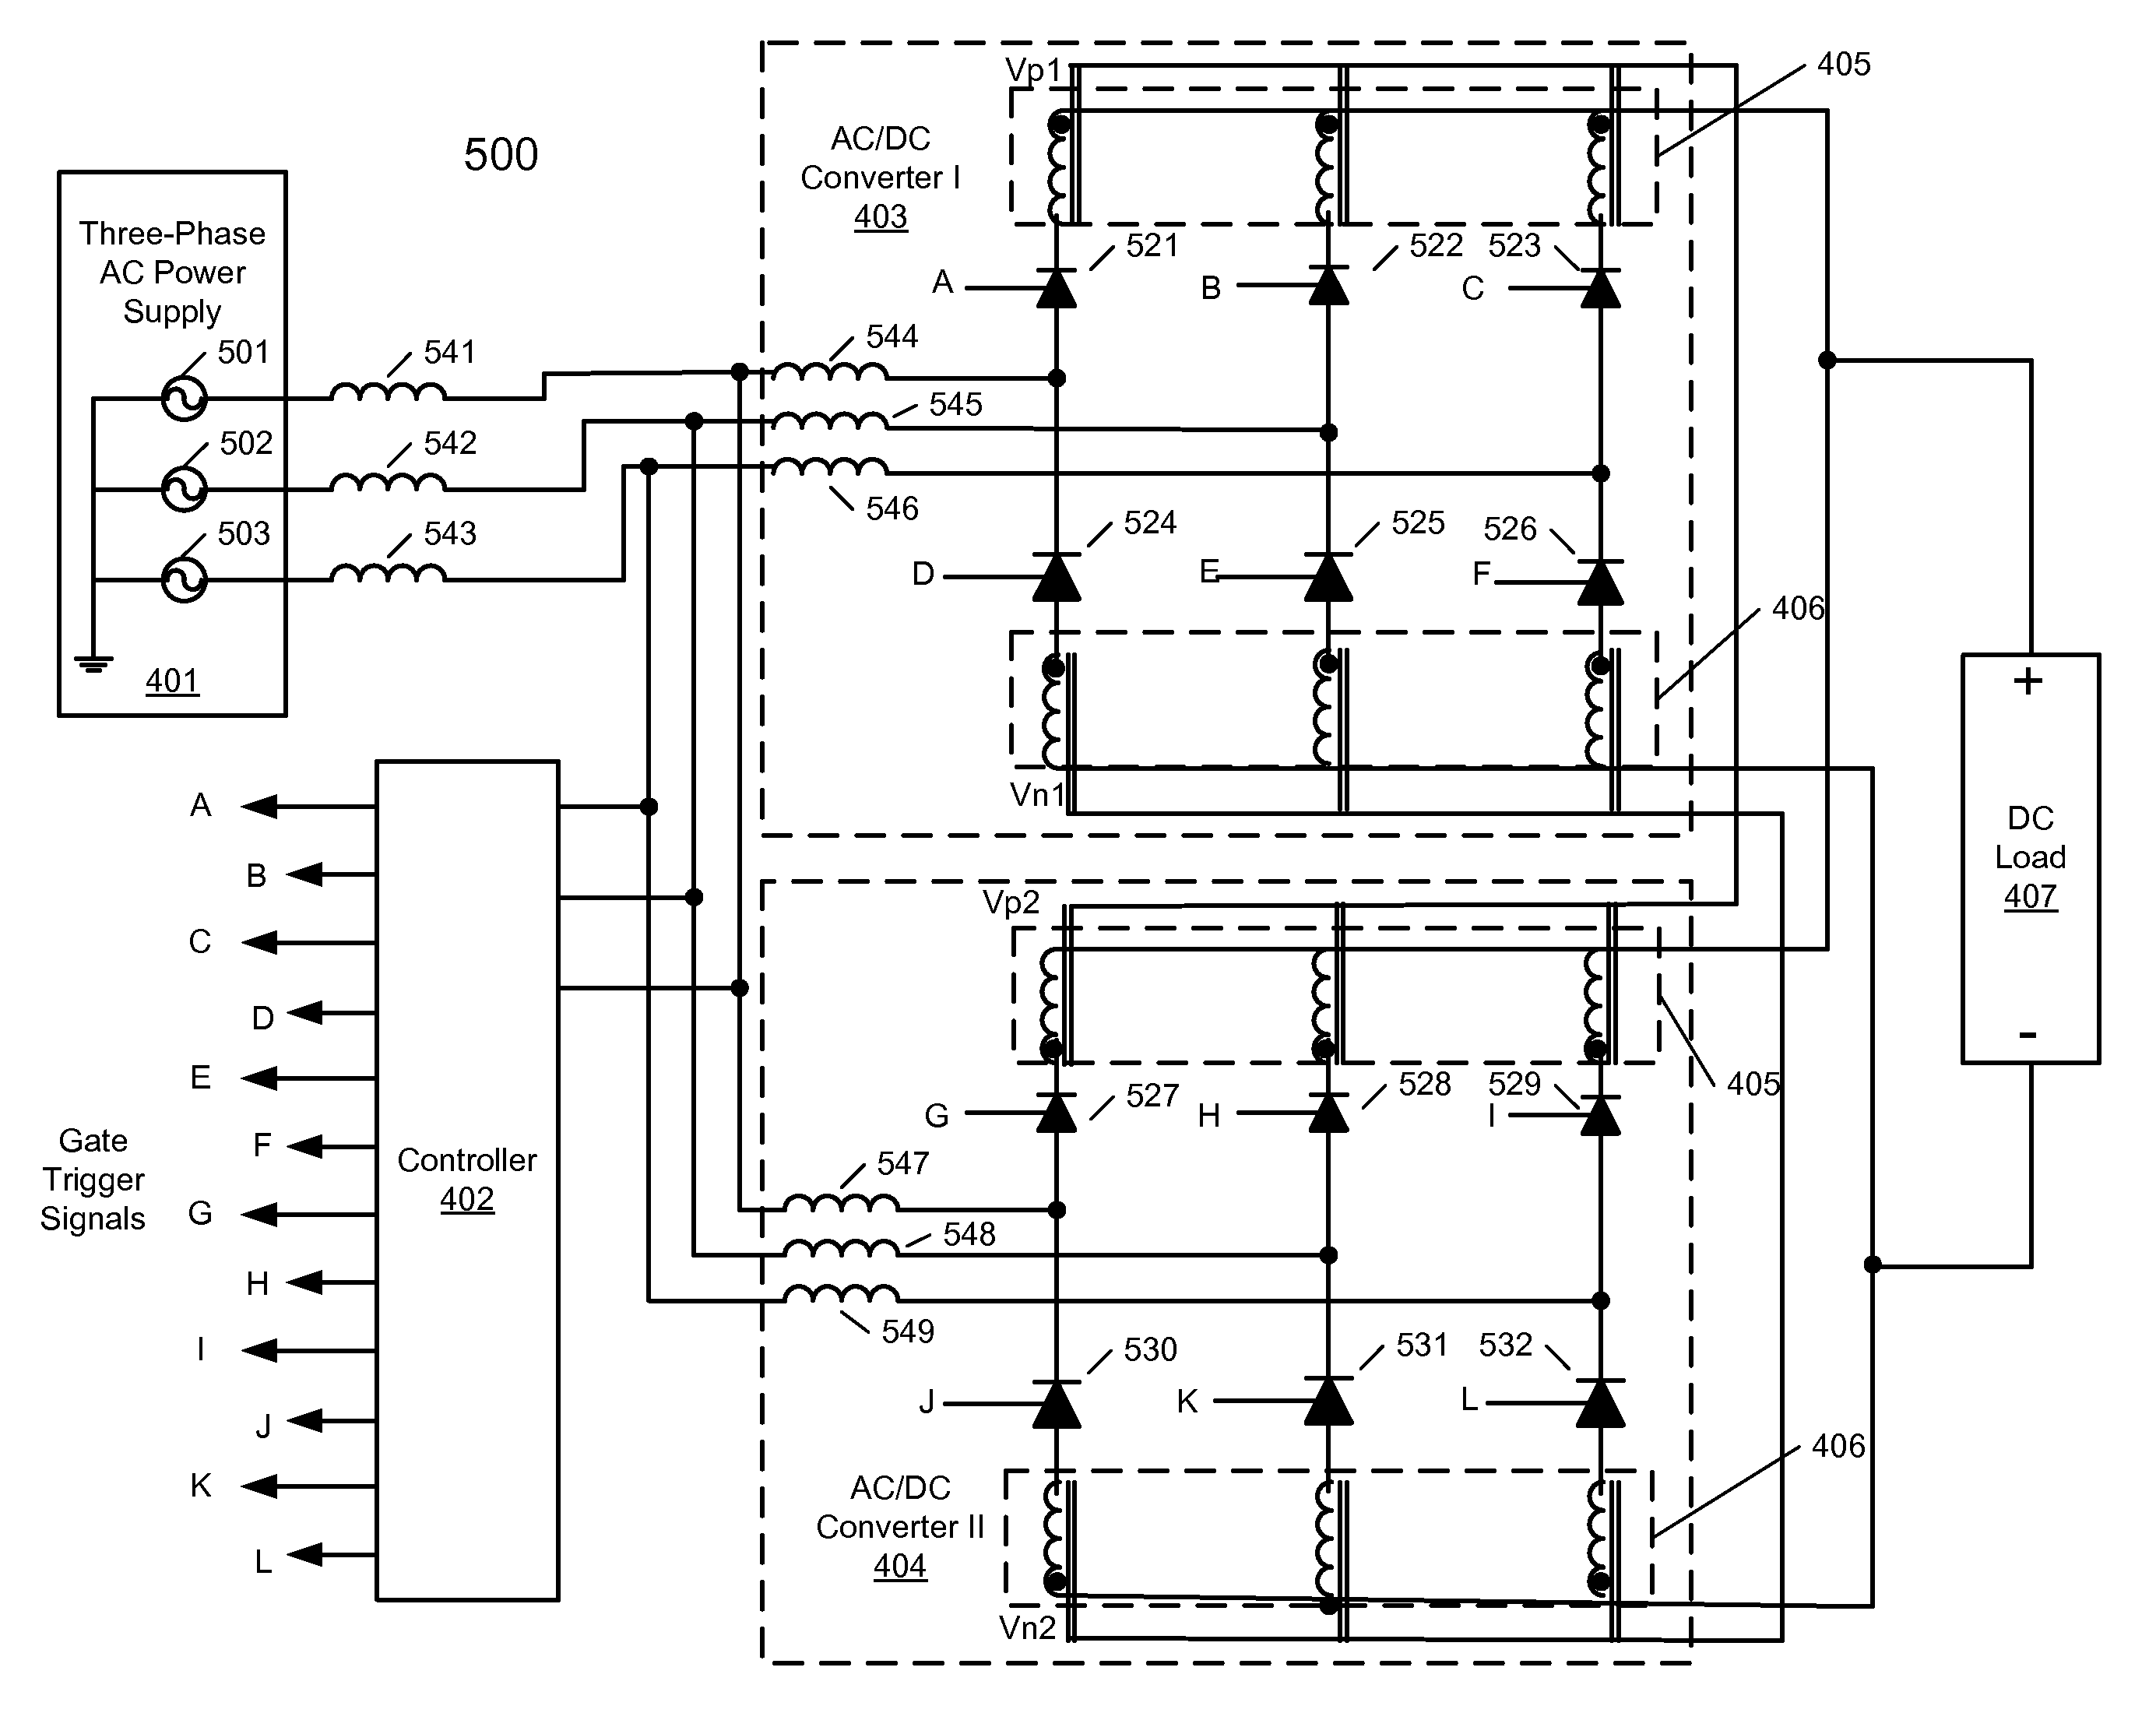 Power conversion circuits